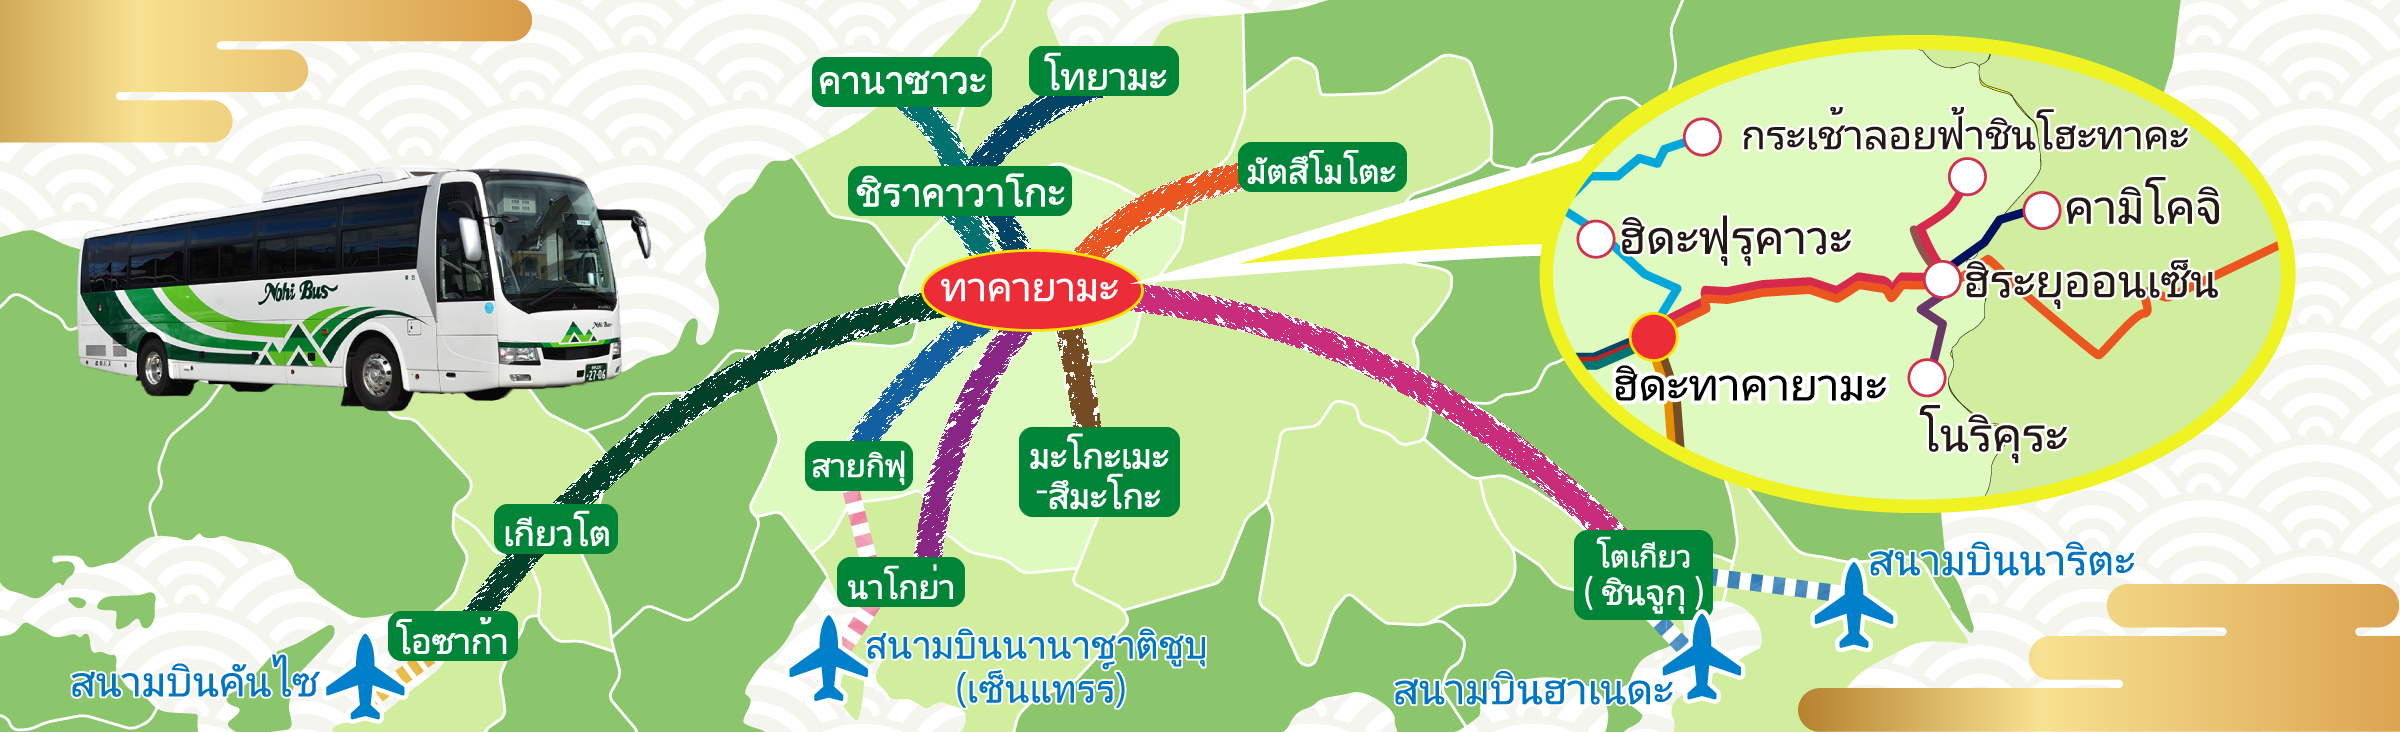 header_map_thai_hida